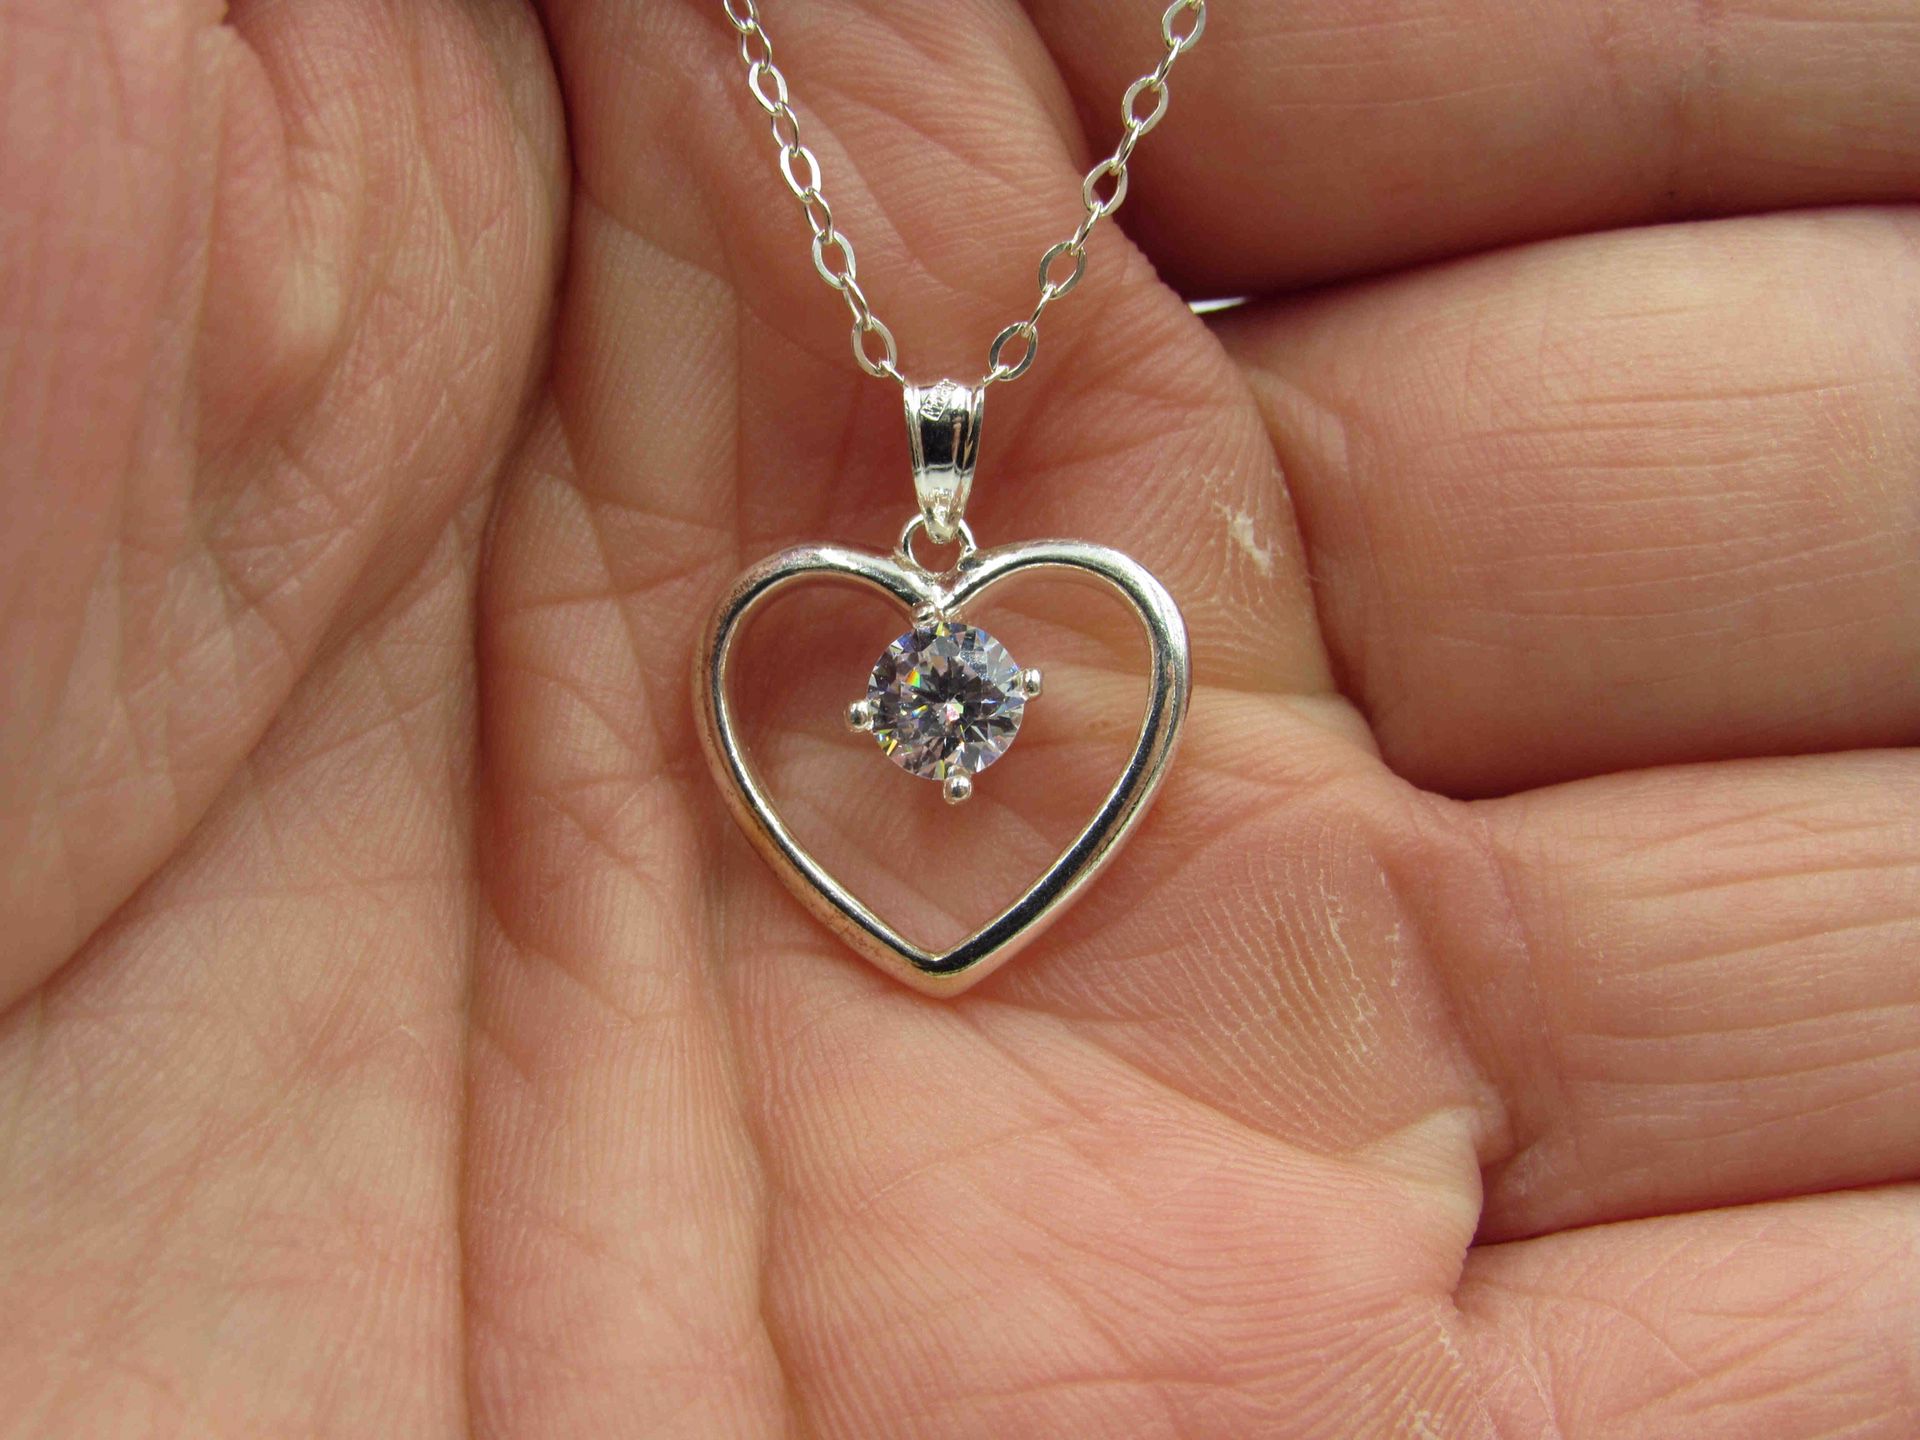 18" Sterling Silver CZ Diamond Heart Pendant Necklace Vintage Minimalist Everyday Simple Beauty Statement Unique Pretty Cute Special